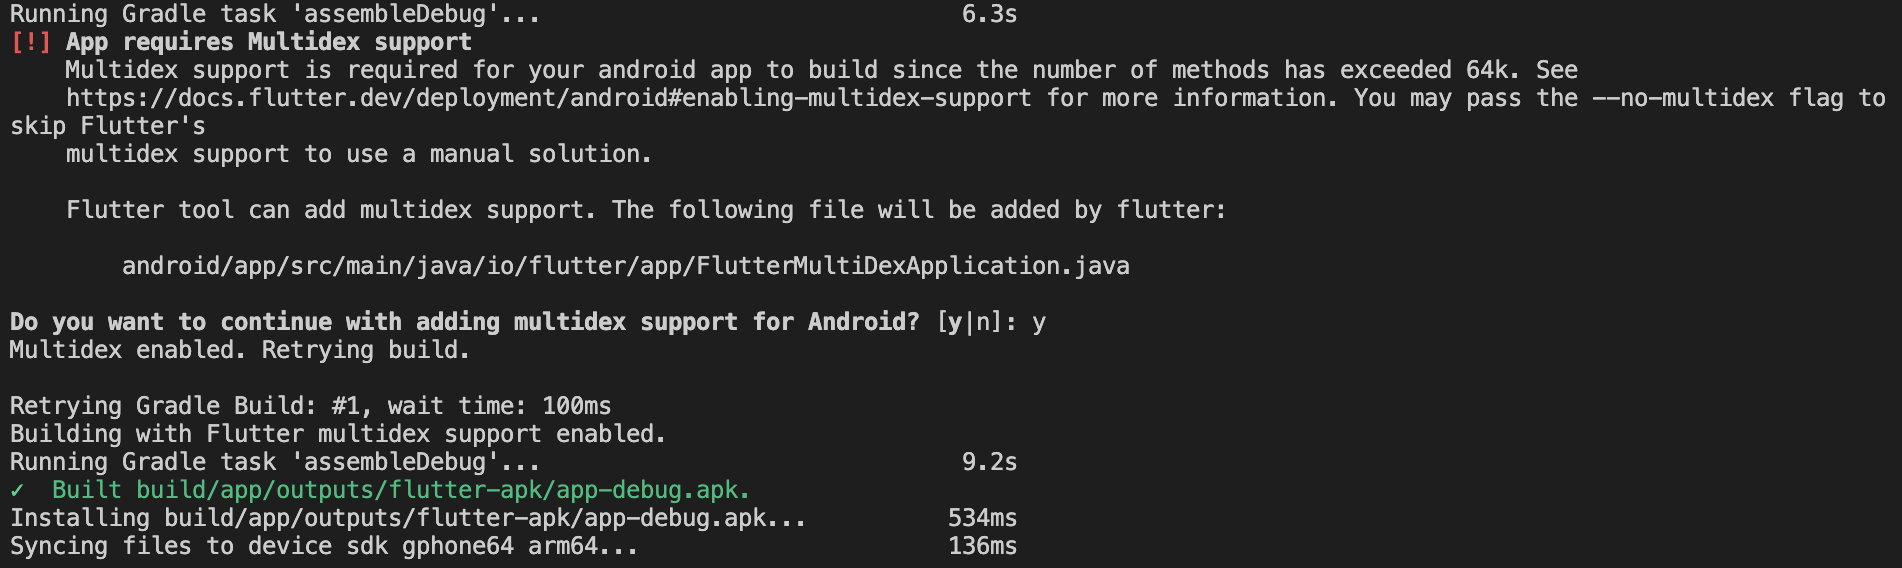 screenshot of a successful build after adding multidex